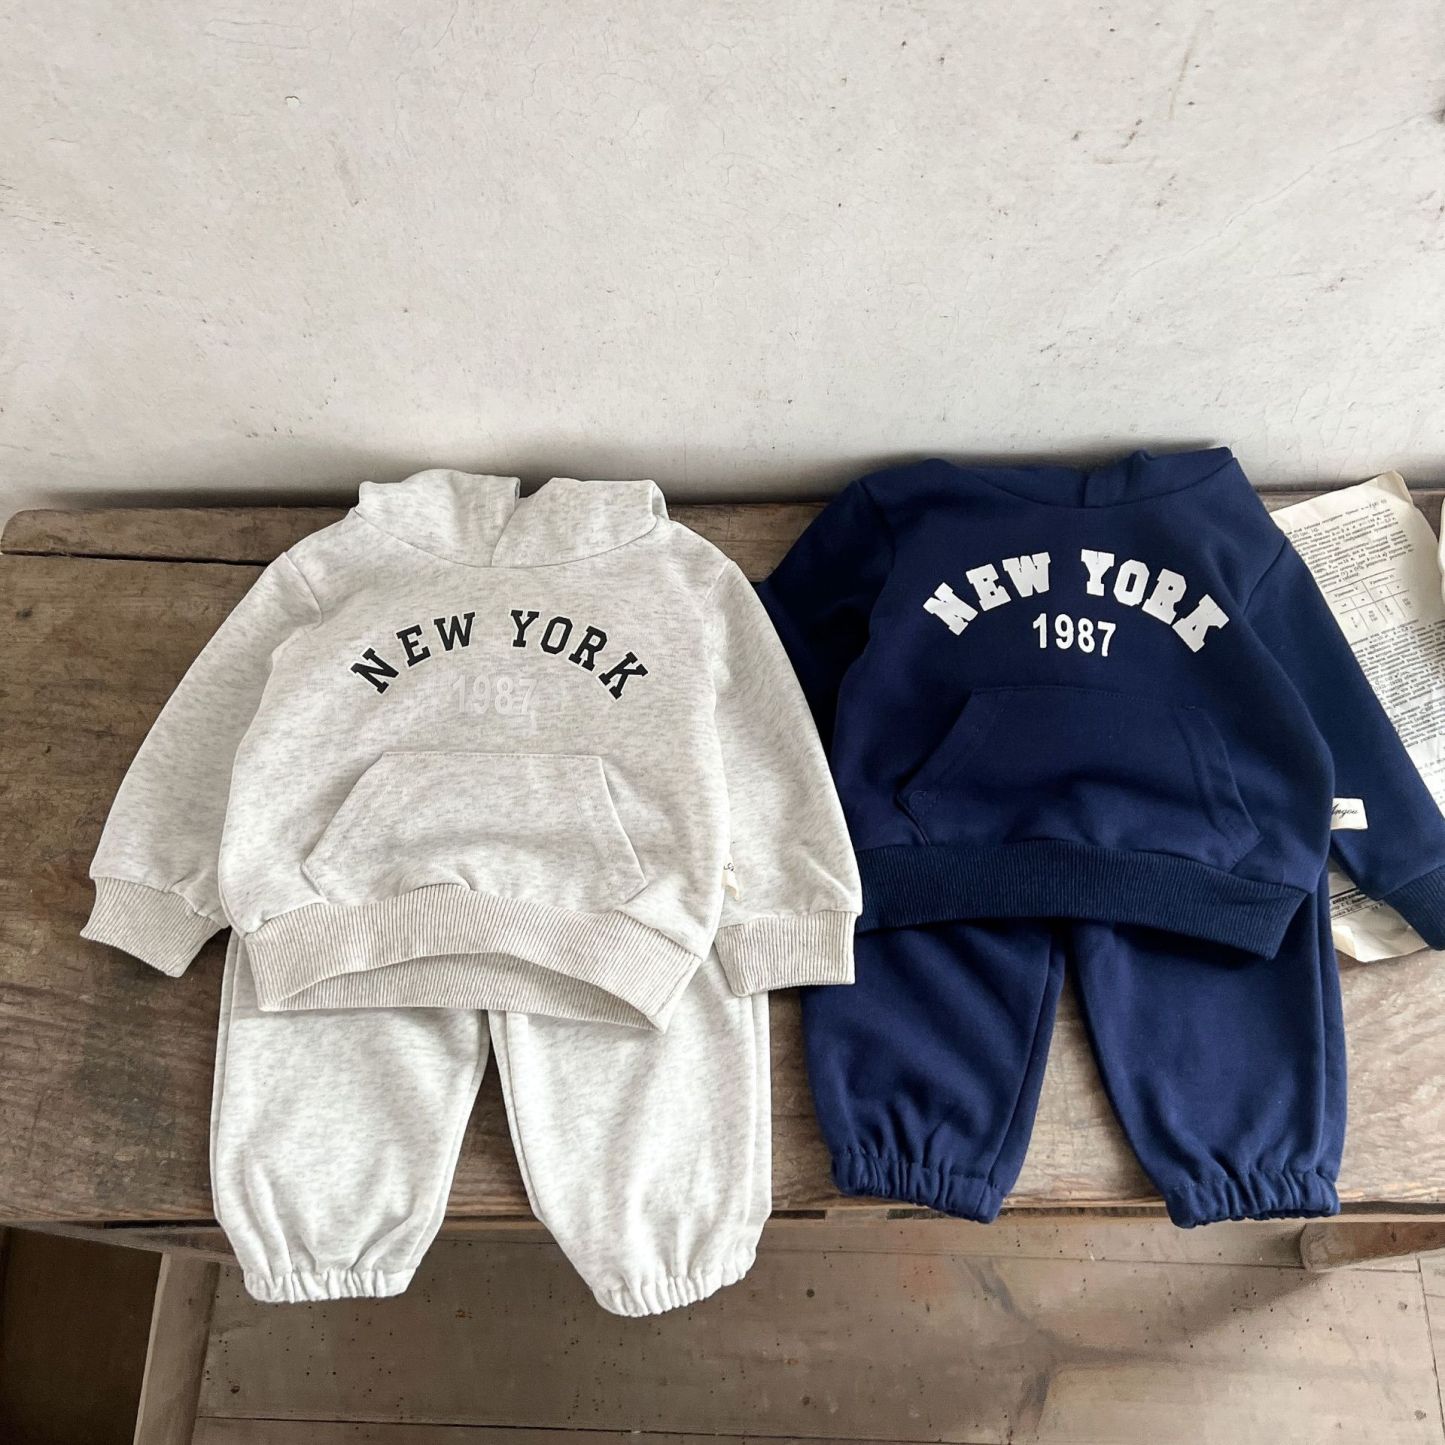 Baby New York Hoody Suit